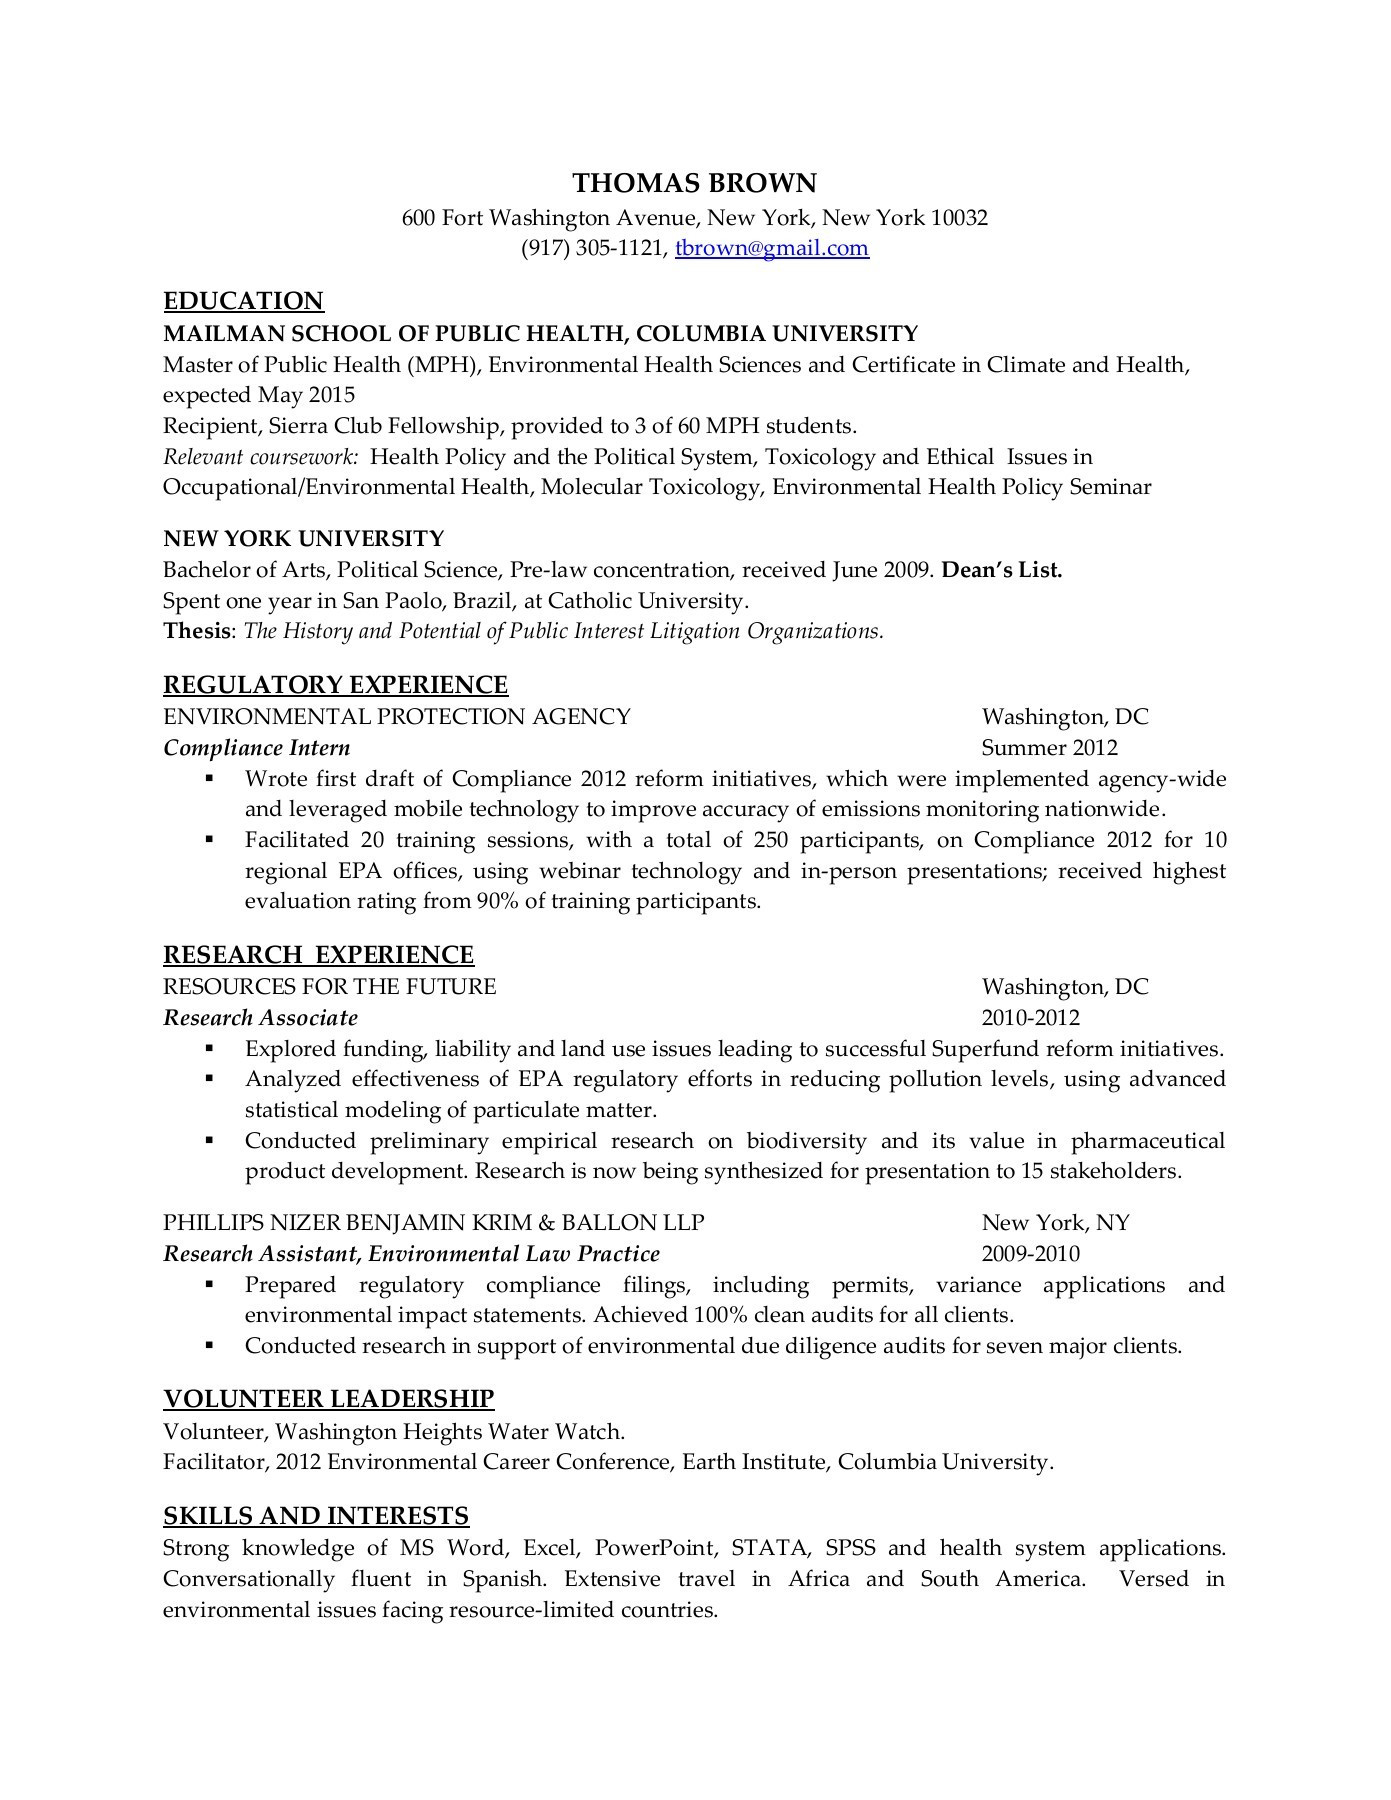 Sample Resume for Public Health New Grad Resume Samples – Mailman School Of Public Health